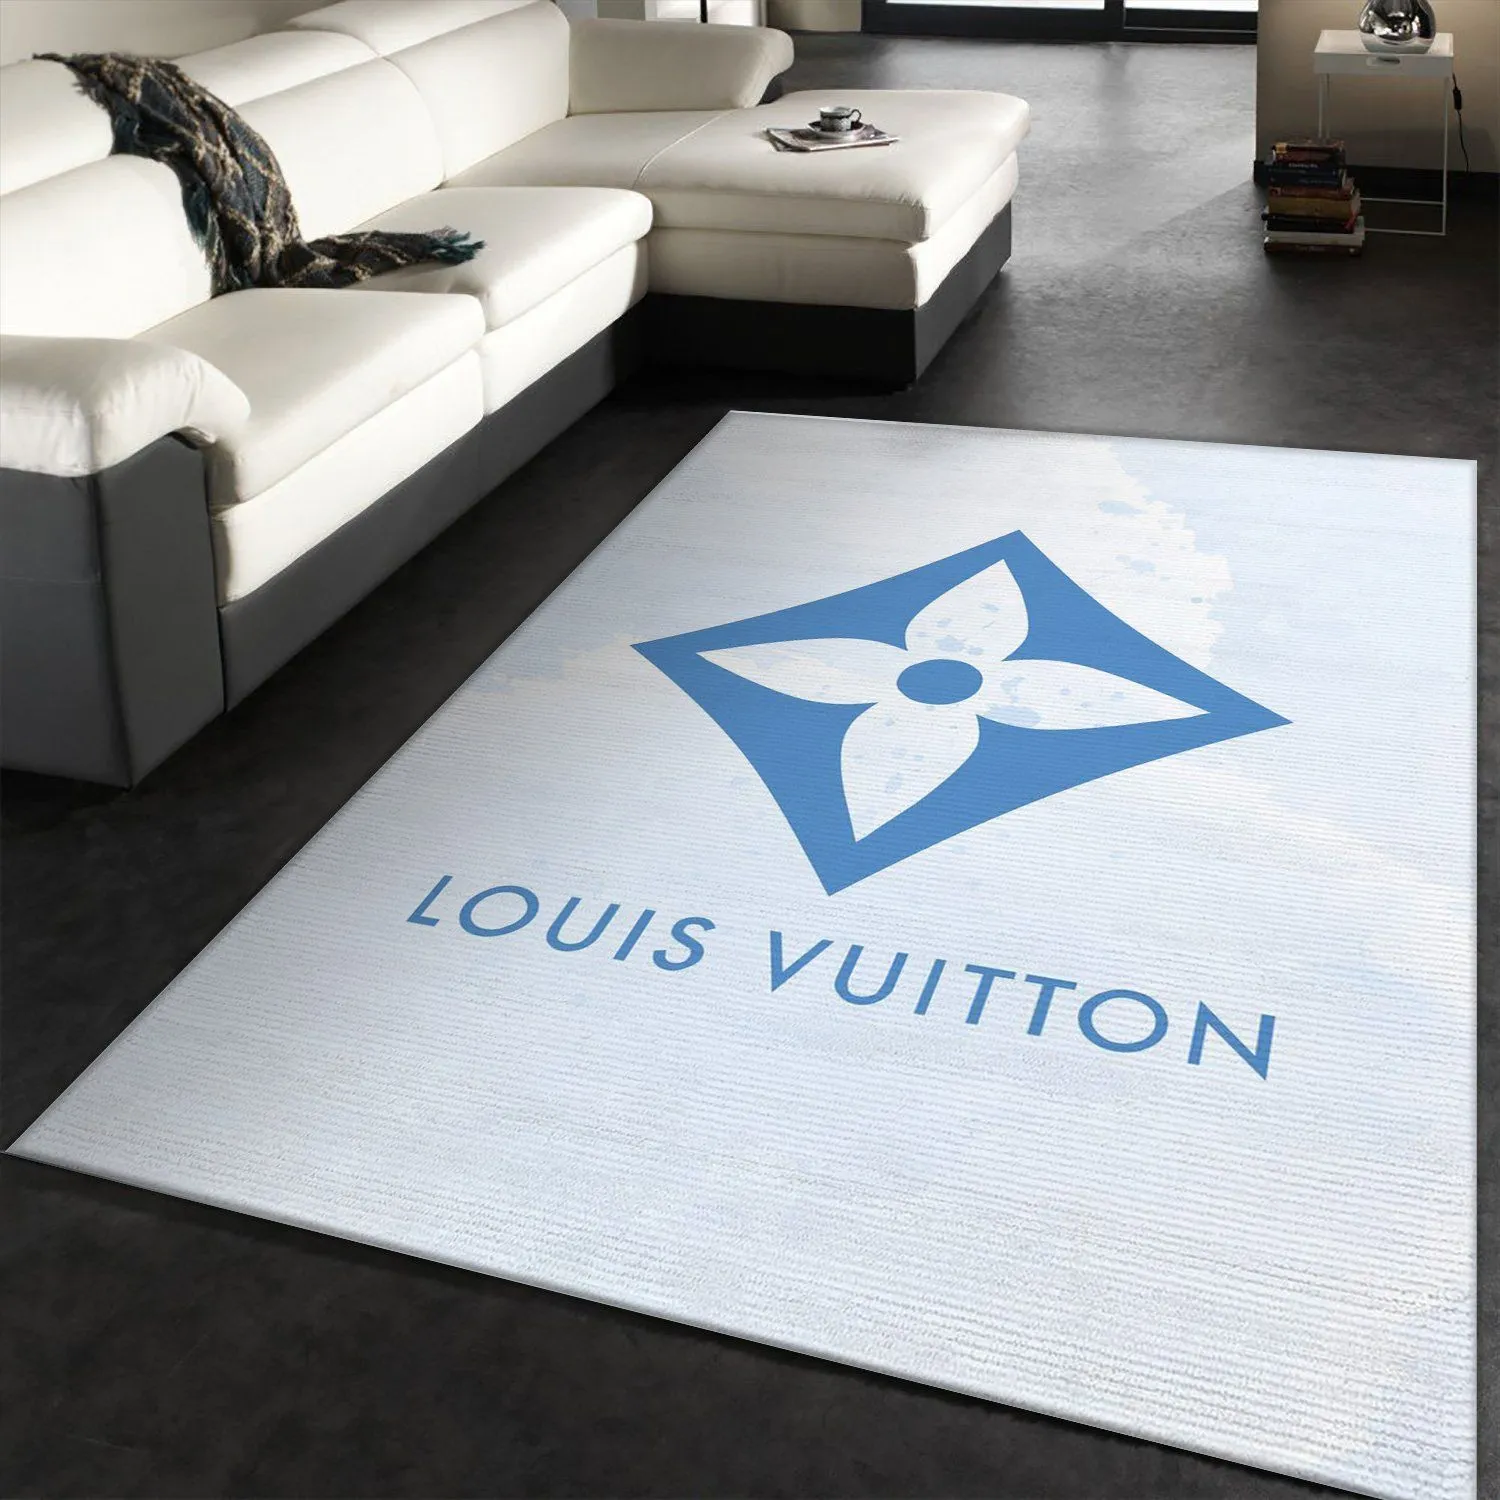 Louis Vuitton Rectangle Rug Door Mat Fashion Brand Luxury Area Carpet Home Decor